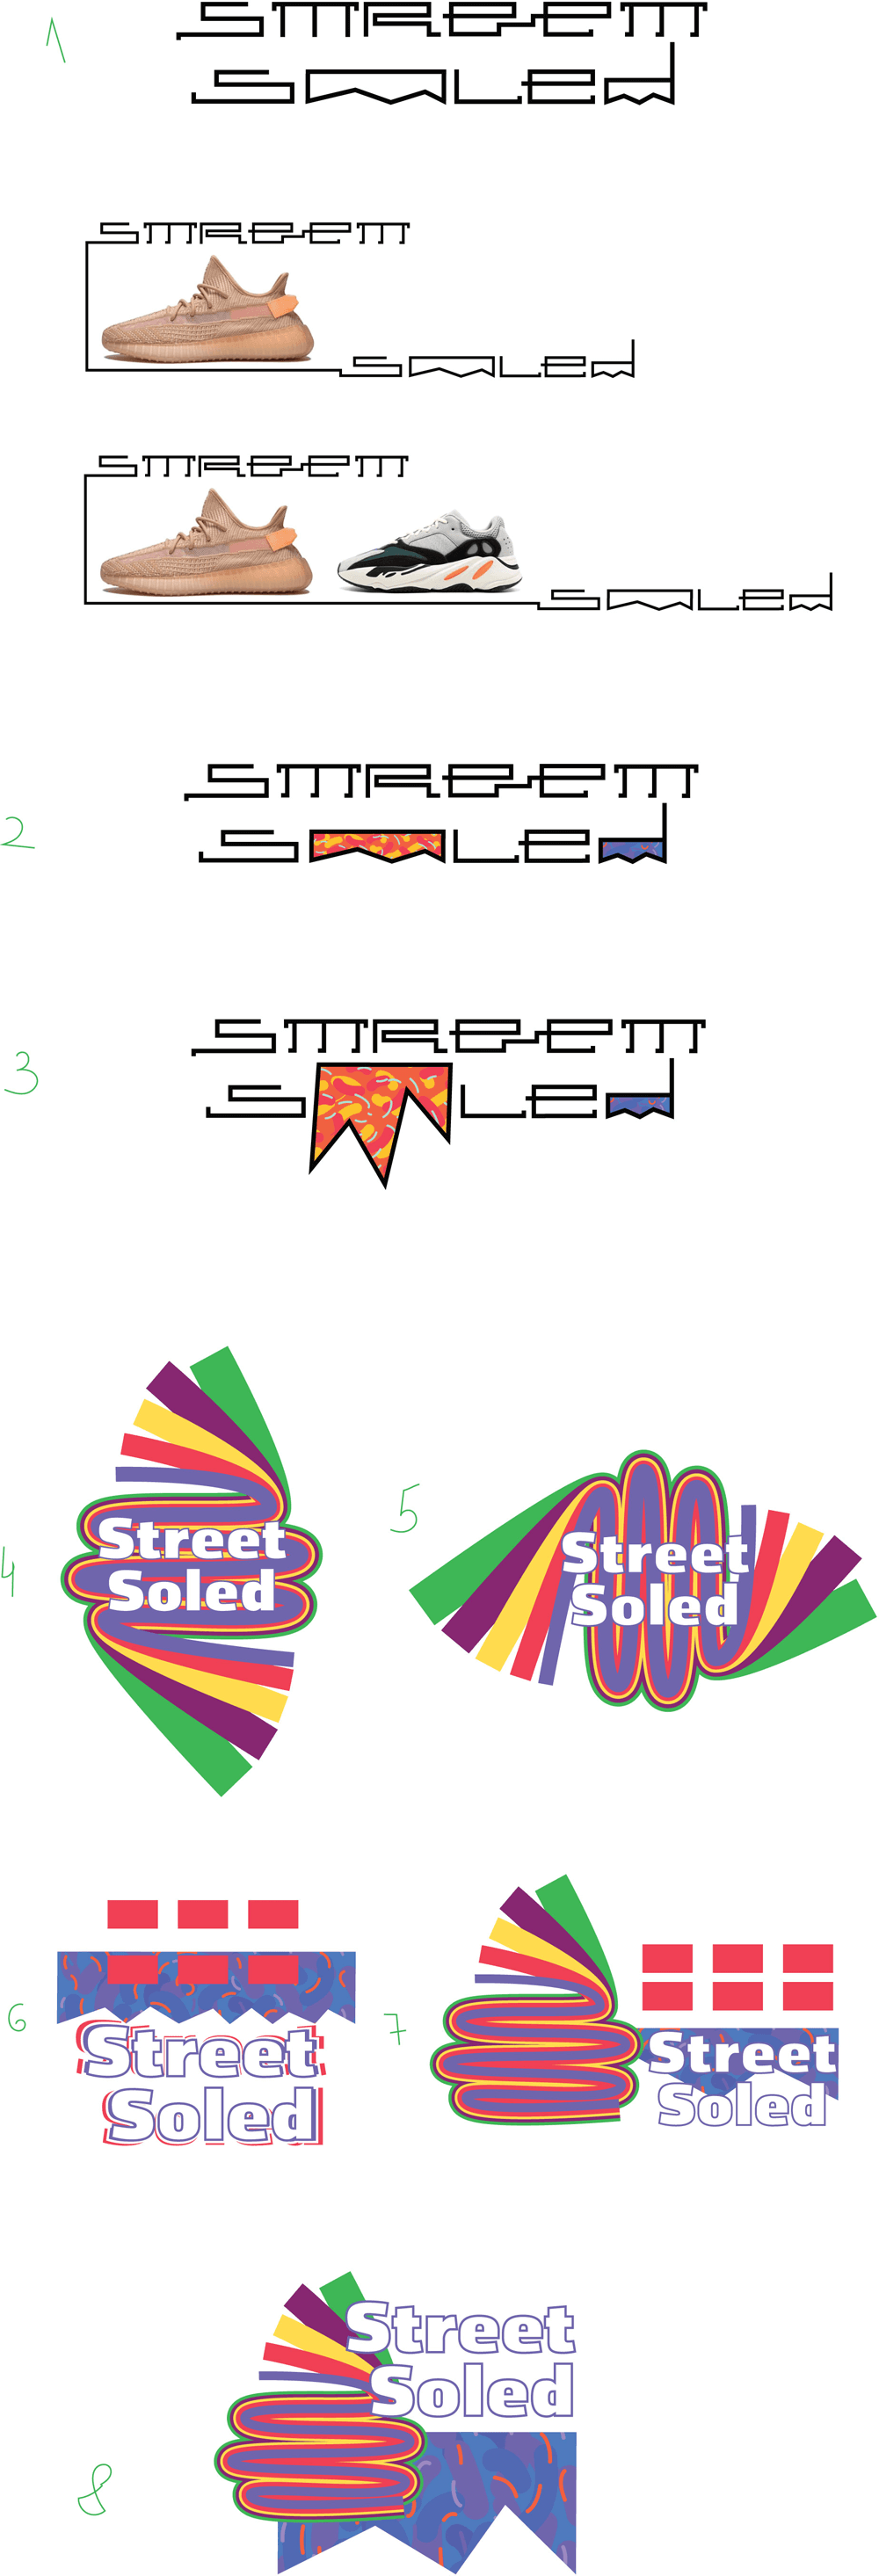 streetsoled process 08